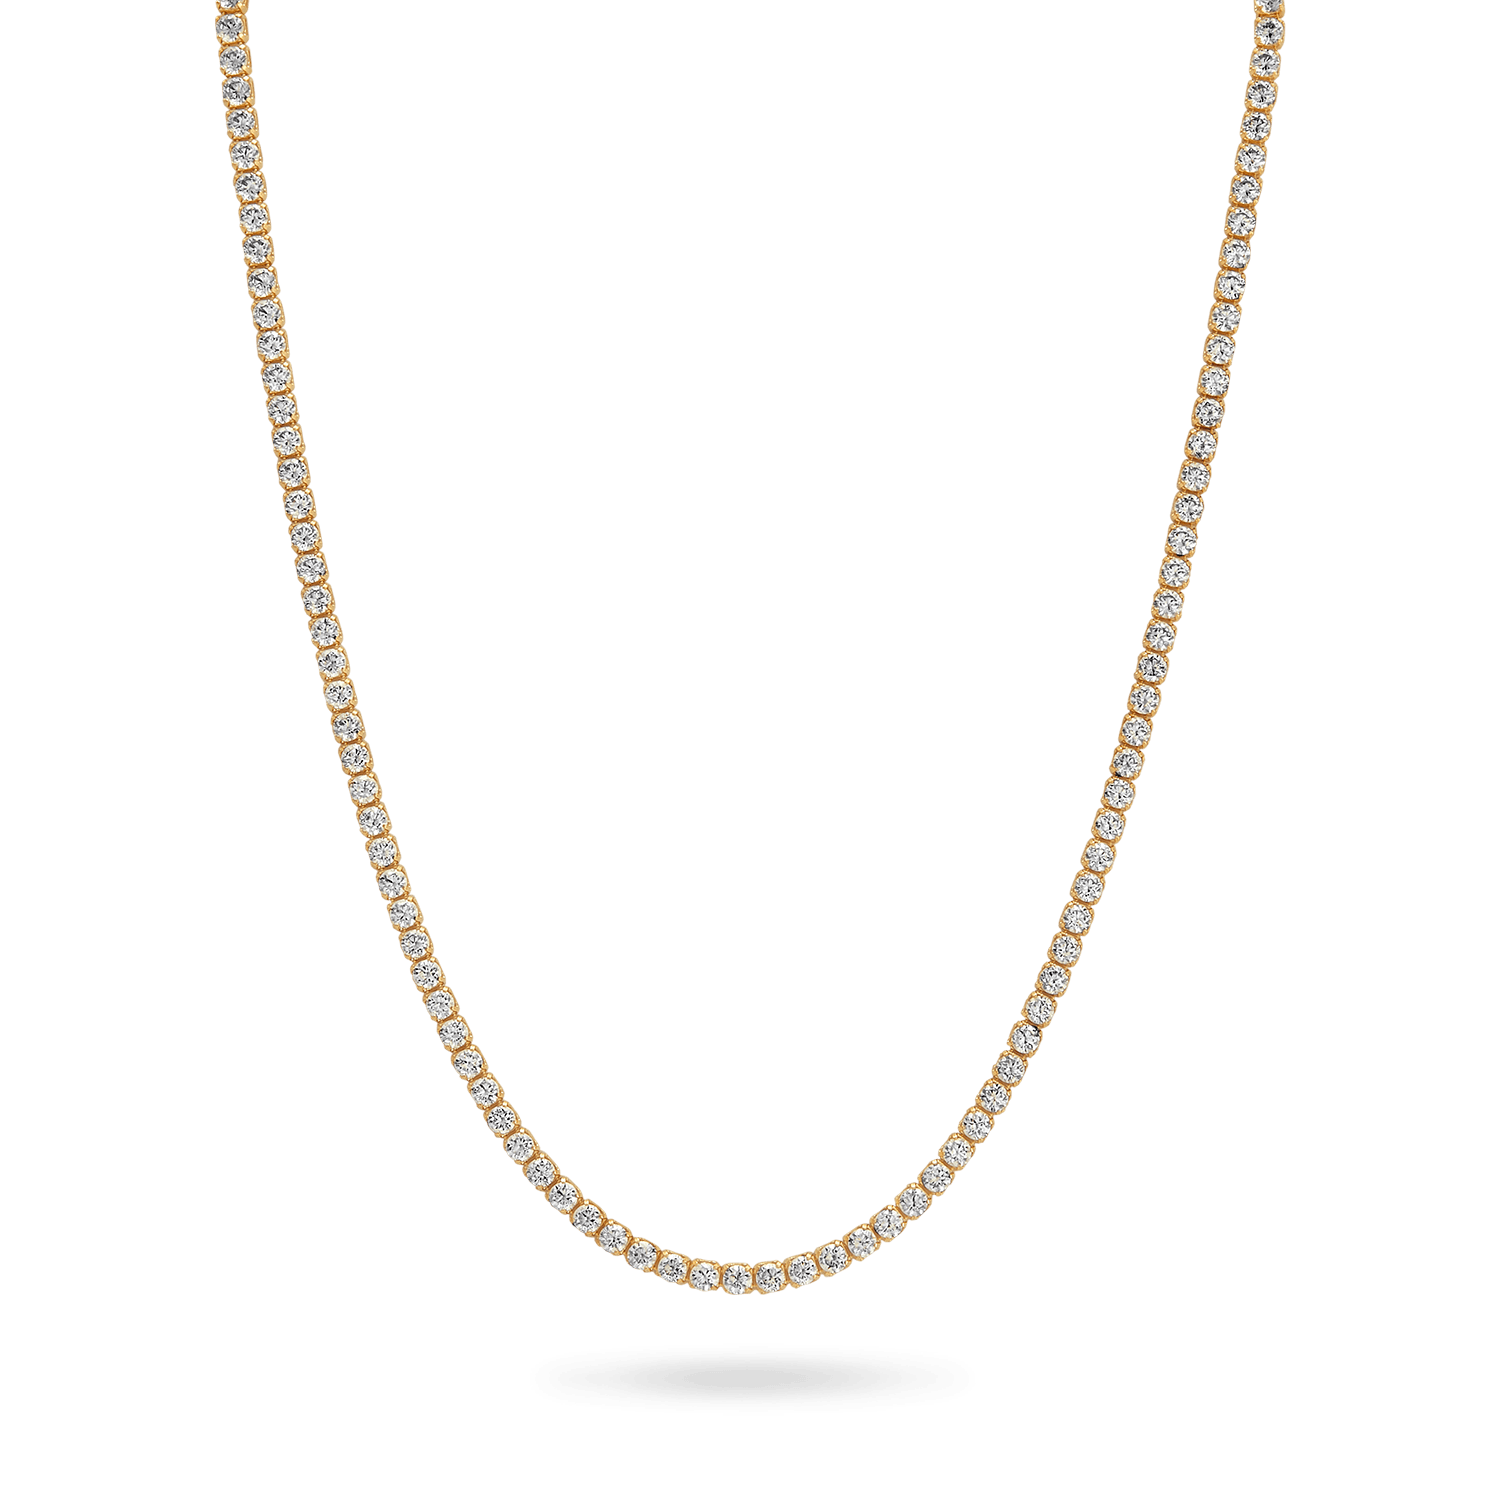 14K Gold Tennis Necklace 2.75mm Necklaces IceLink-CAL   